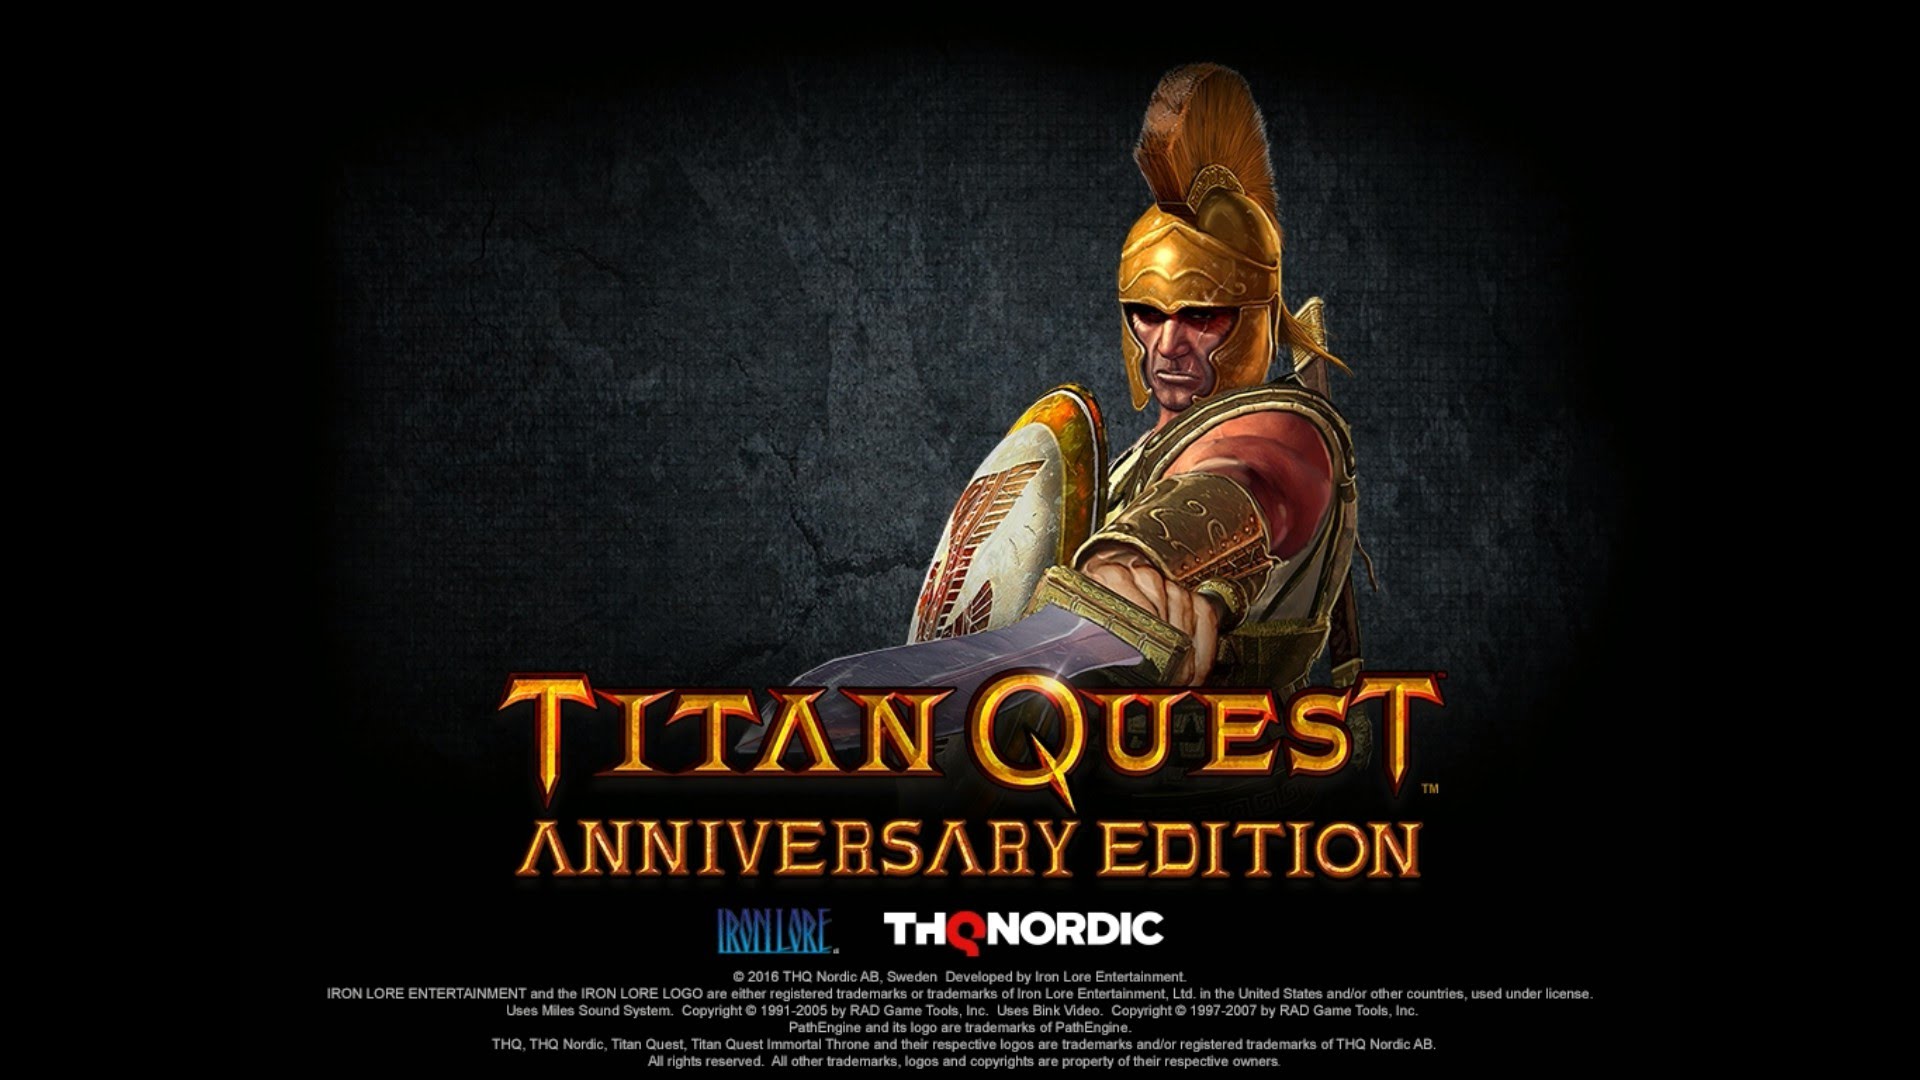 character editor titan quest anniversary edition